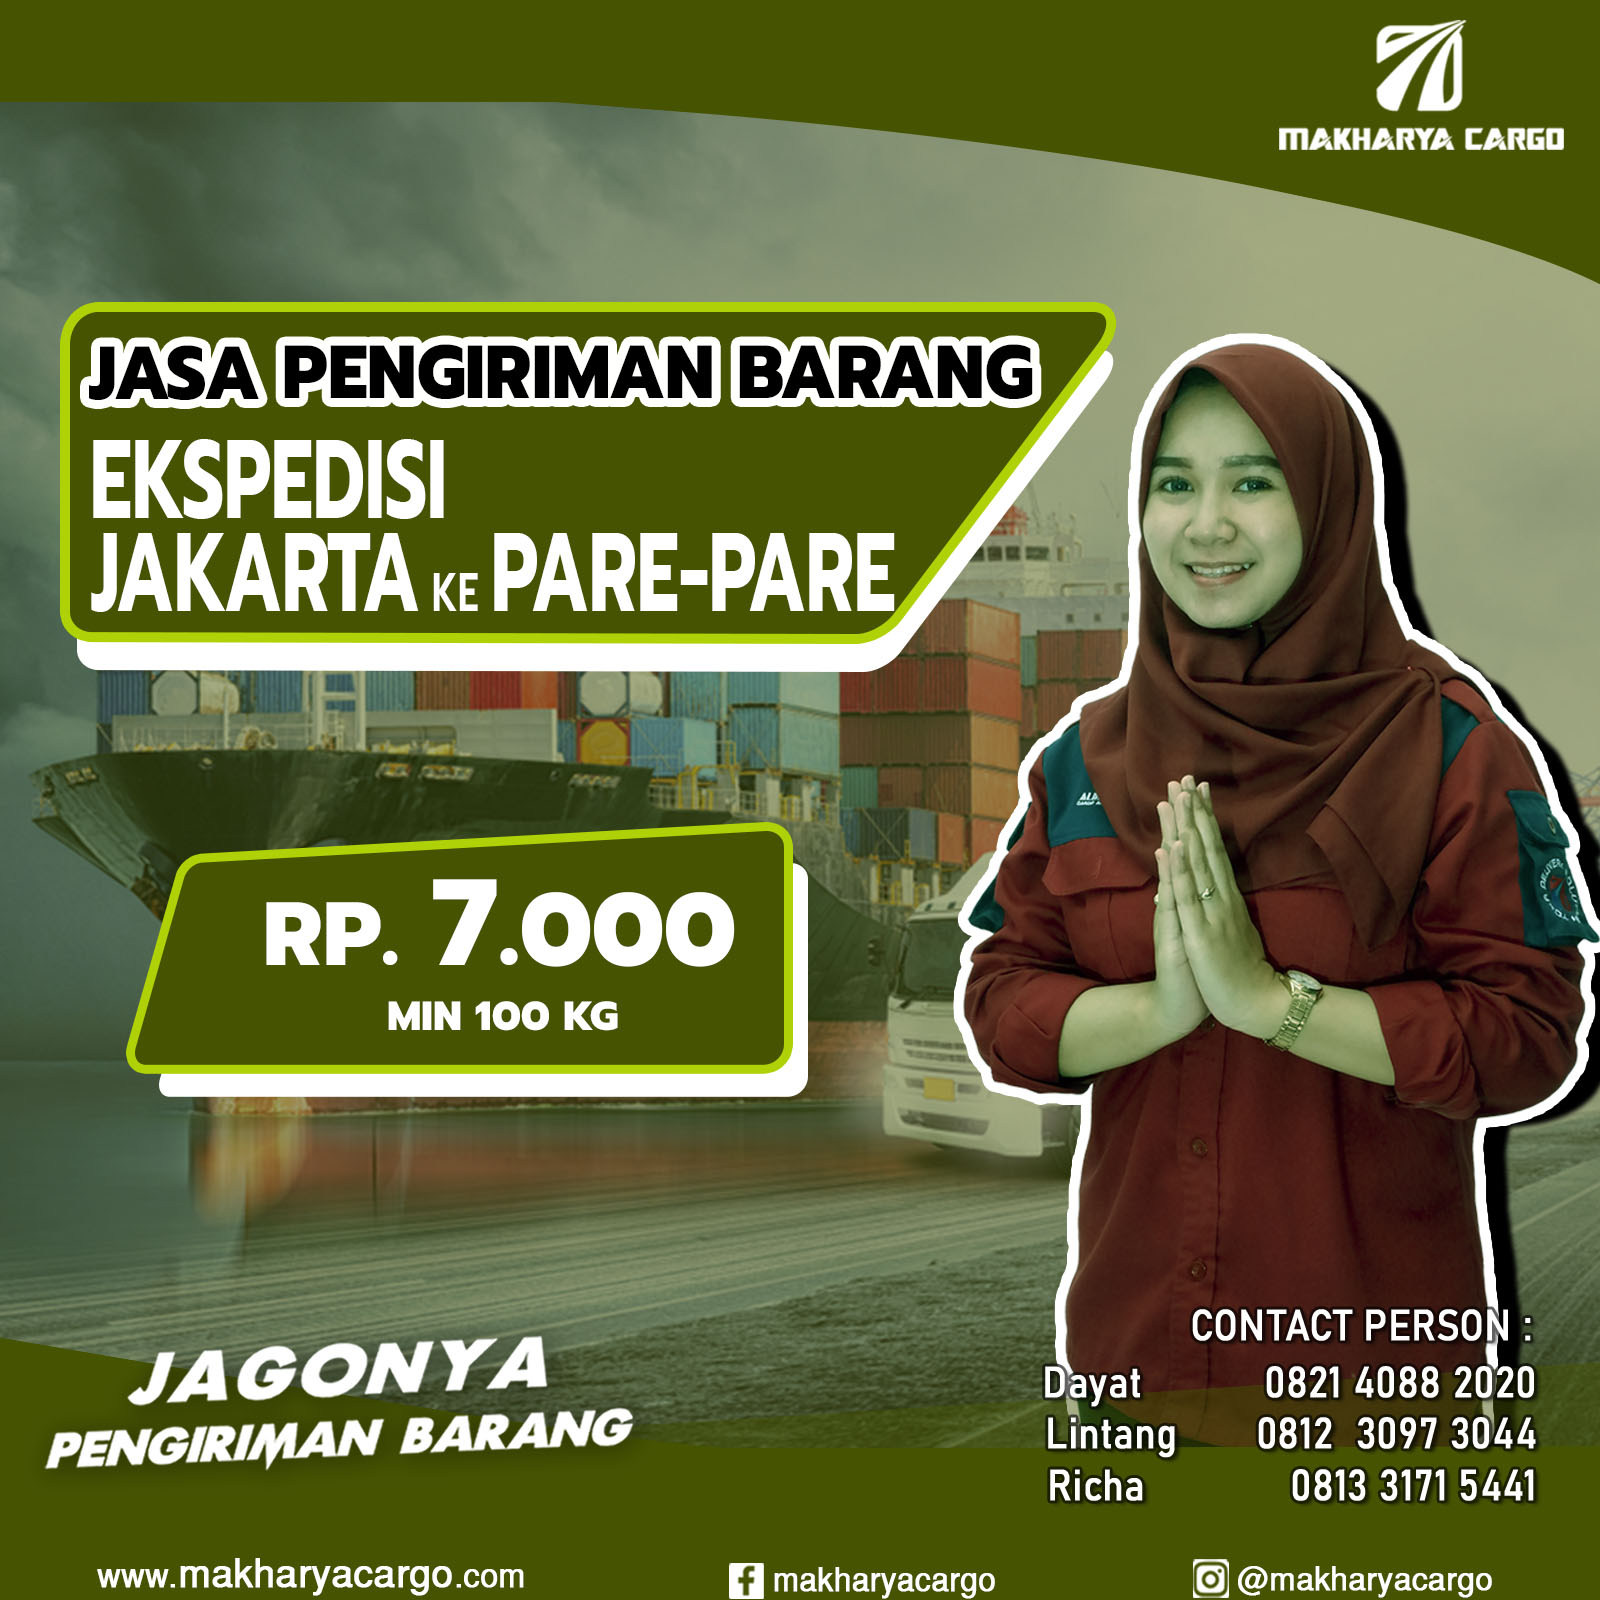 Ekspedisi Jakarta Pare-Pare